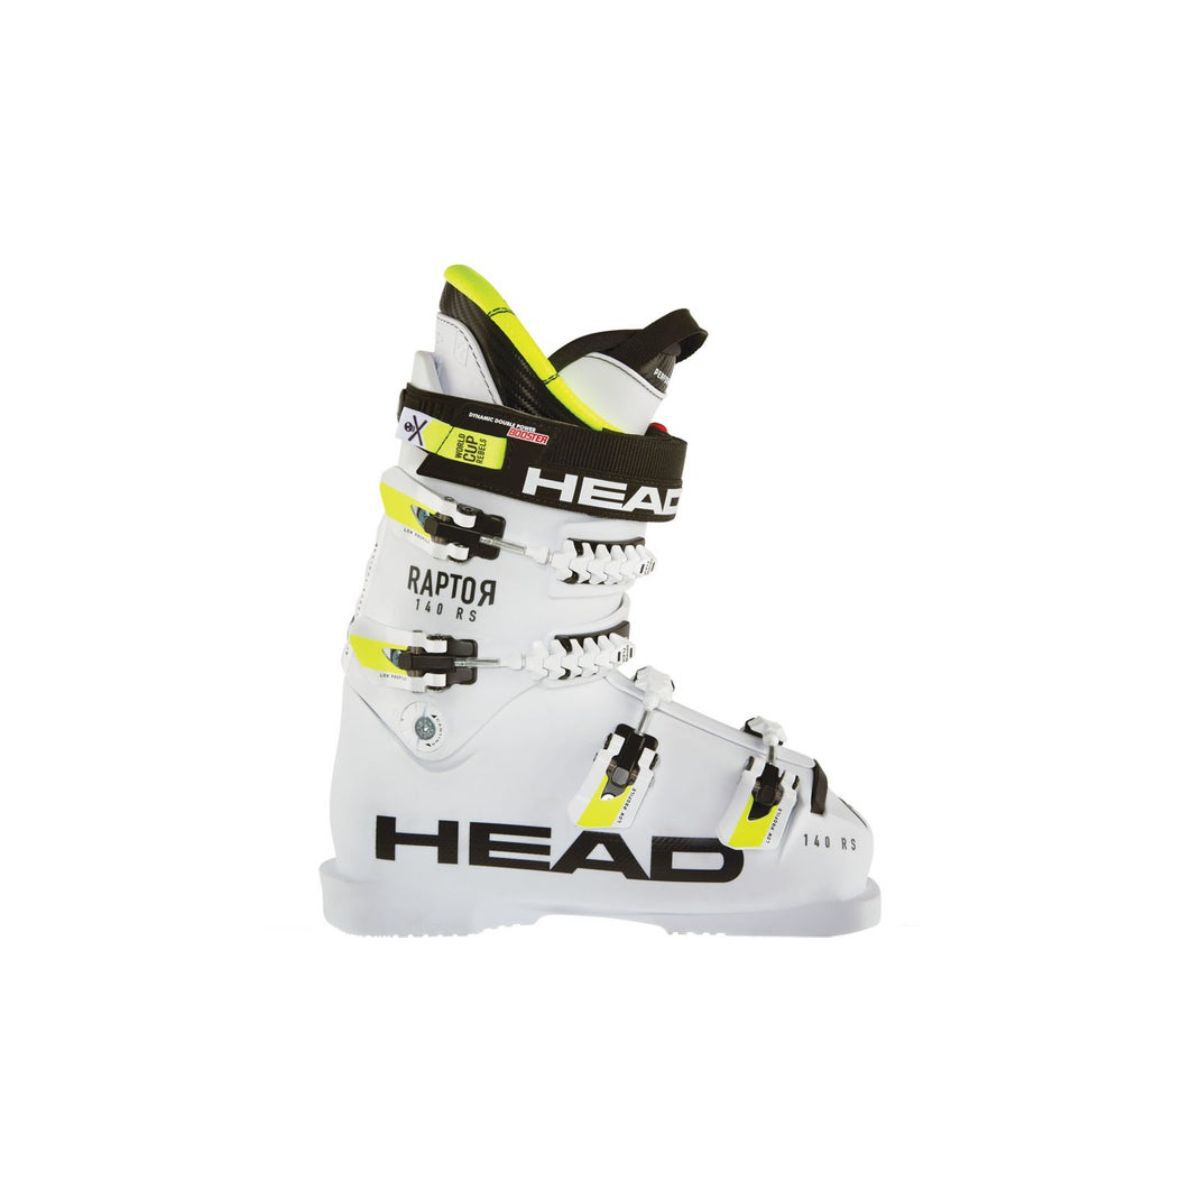 2020 Head Raptor B5 RD Junior Ski Race Boot 